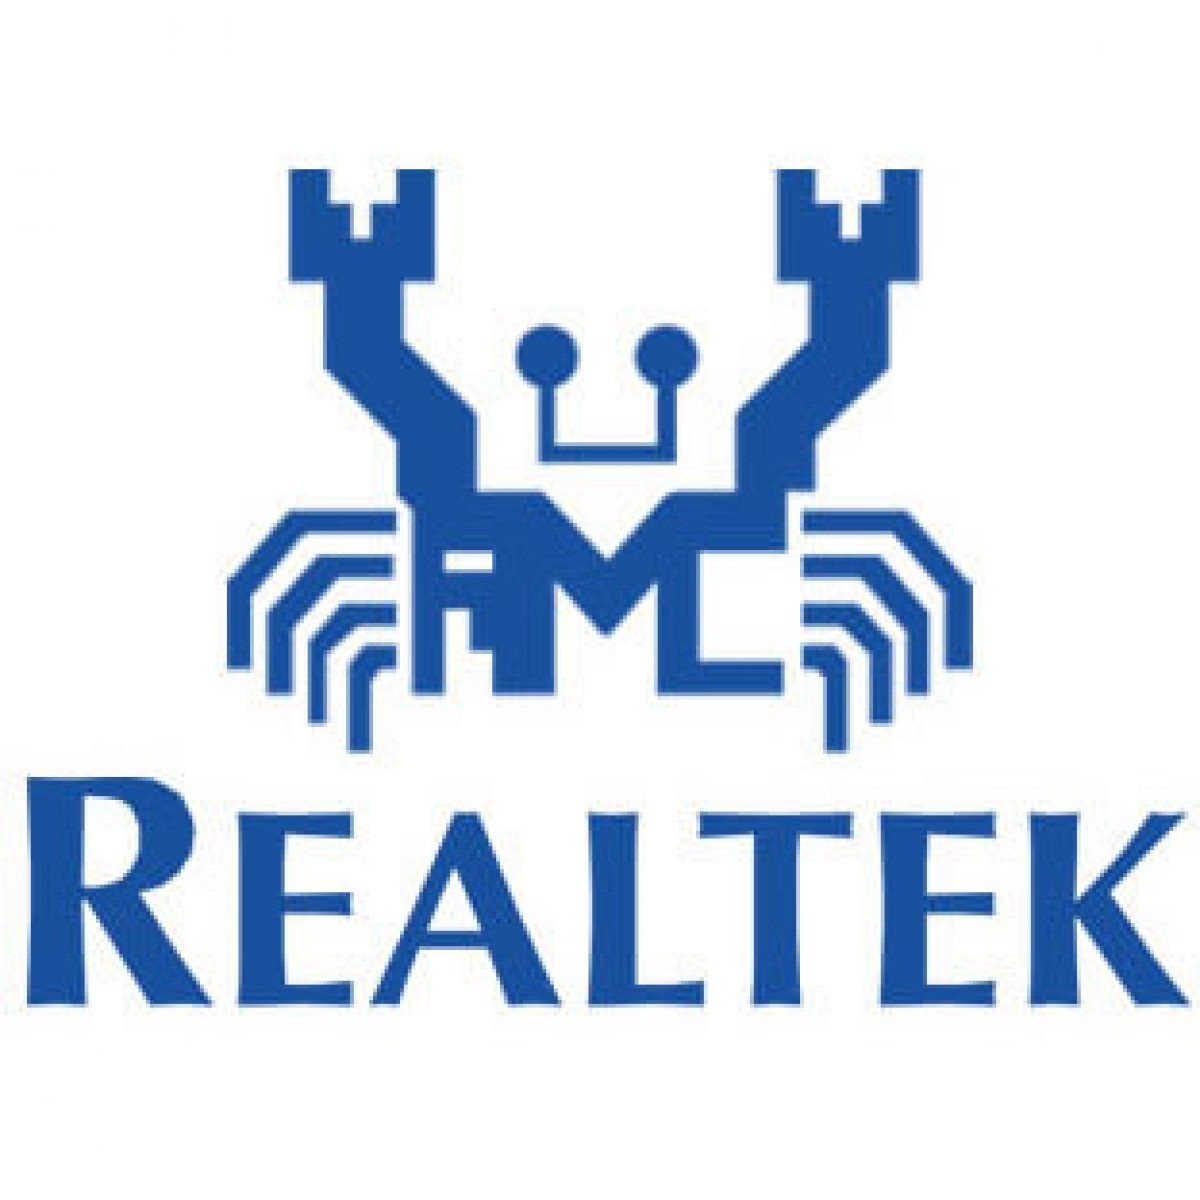 realtek hd audio driver download